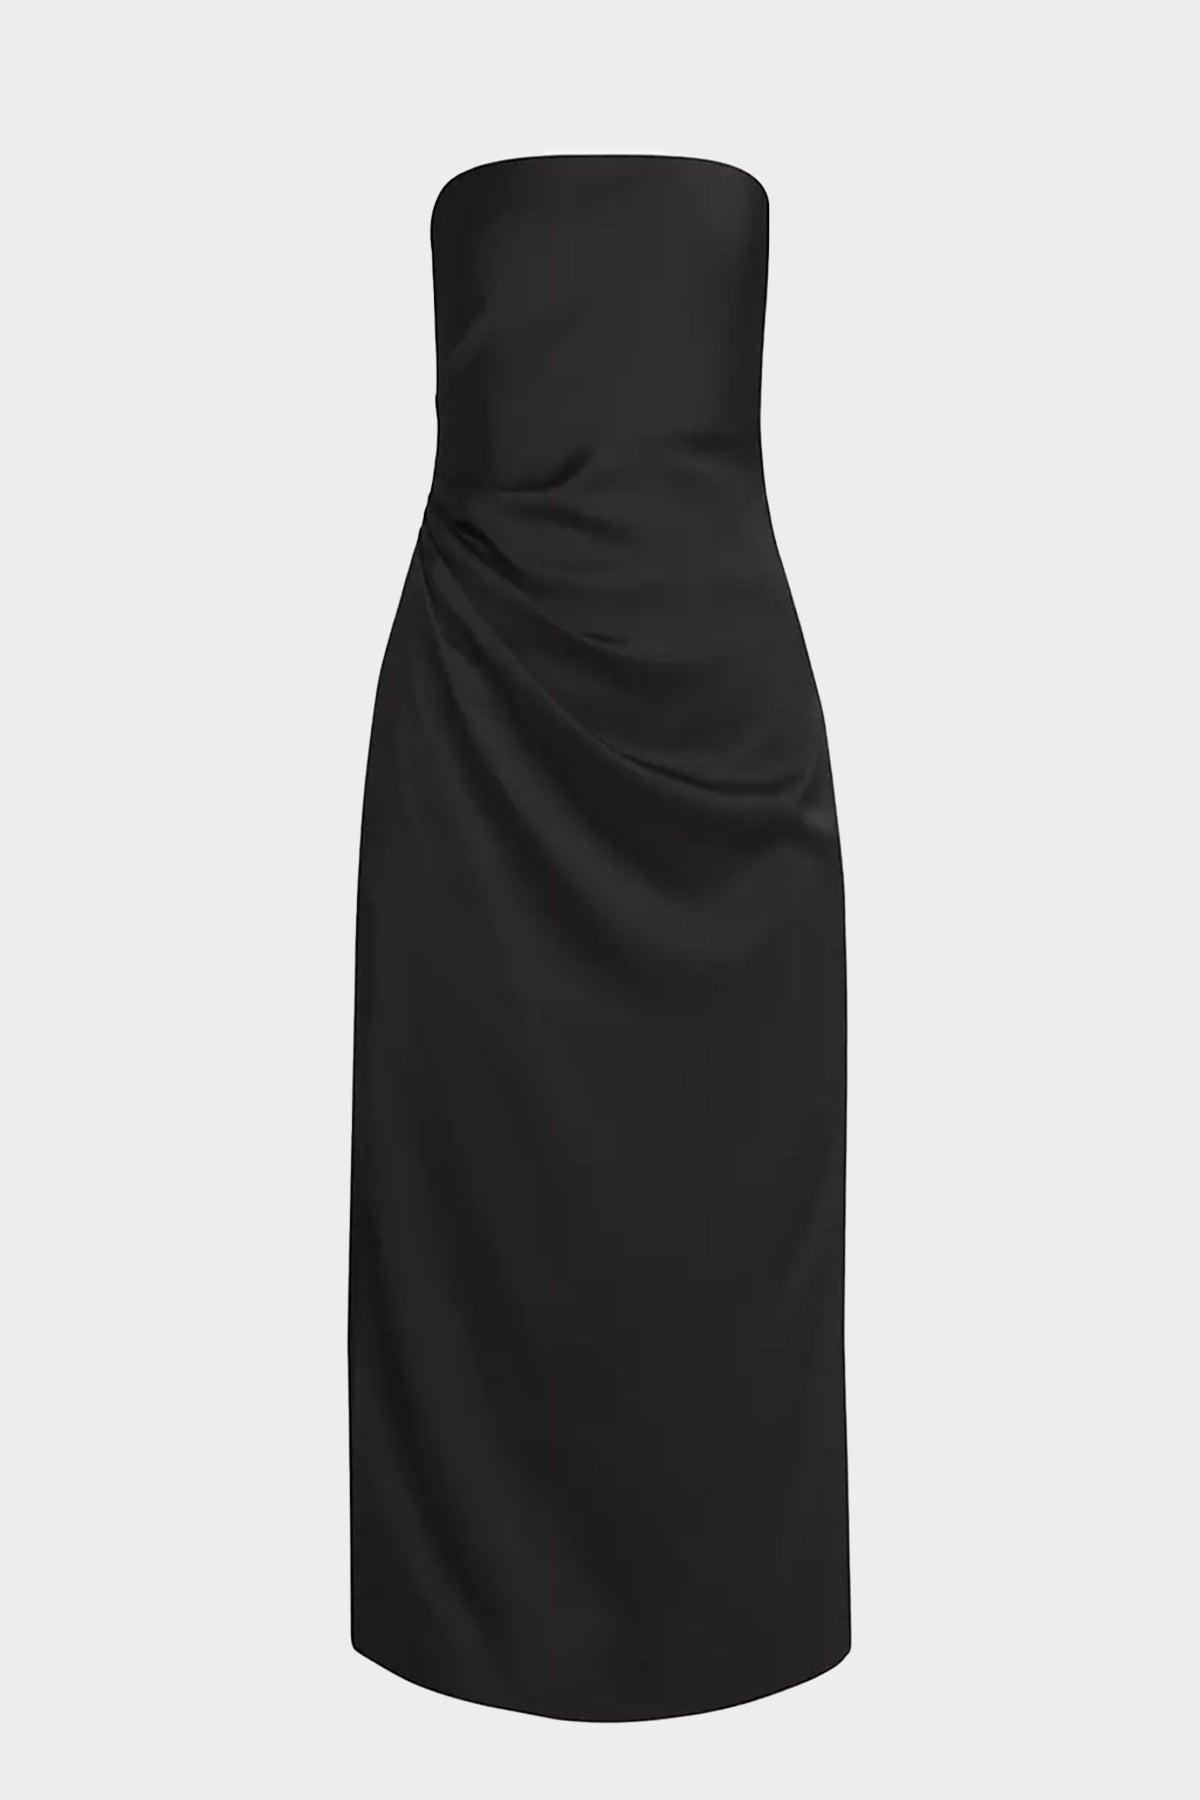 Harriet Strapless Midi Dress in Black - shop-olivia.com